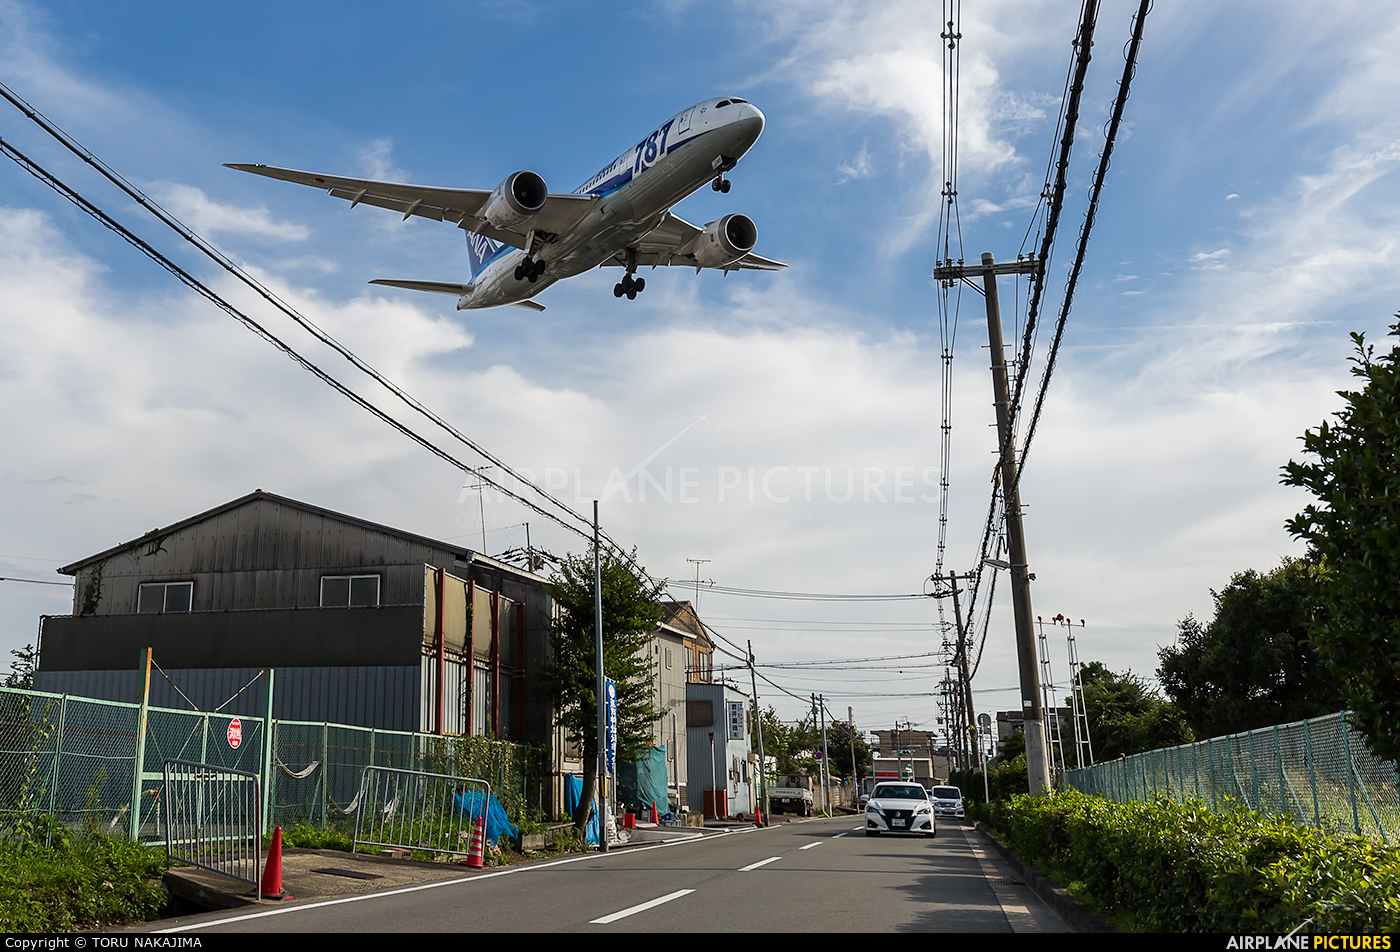 ANA - All Nippon Airways JA824A aircraft at Off Airport - Japan